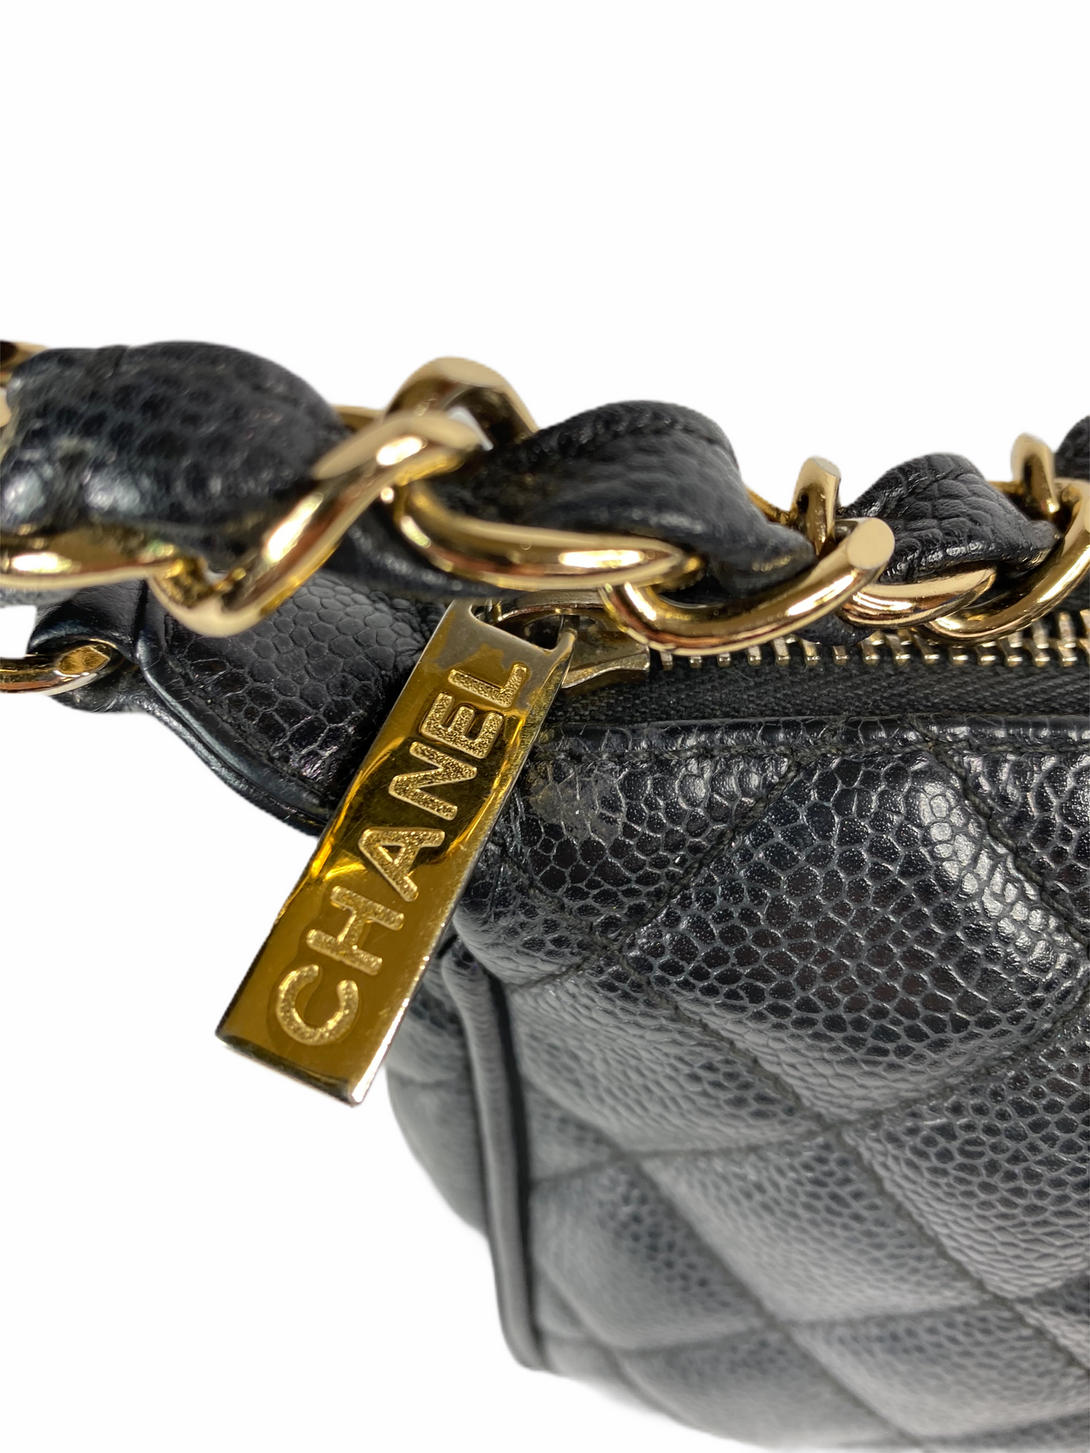 Chanel Black Caviar Leather Shoulder Bag - As Seen on Instagram 26/08/2020 - Siopaella Designer Exchange